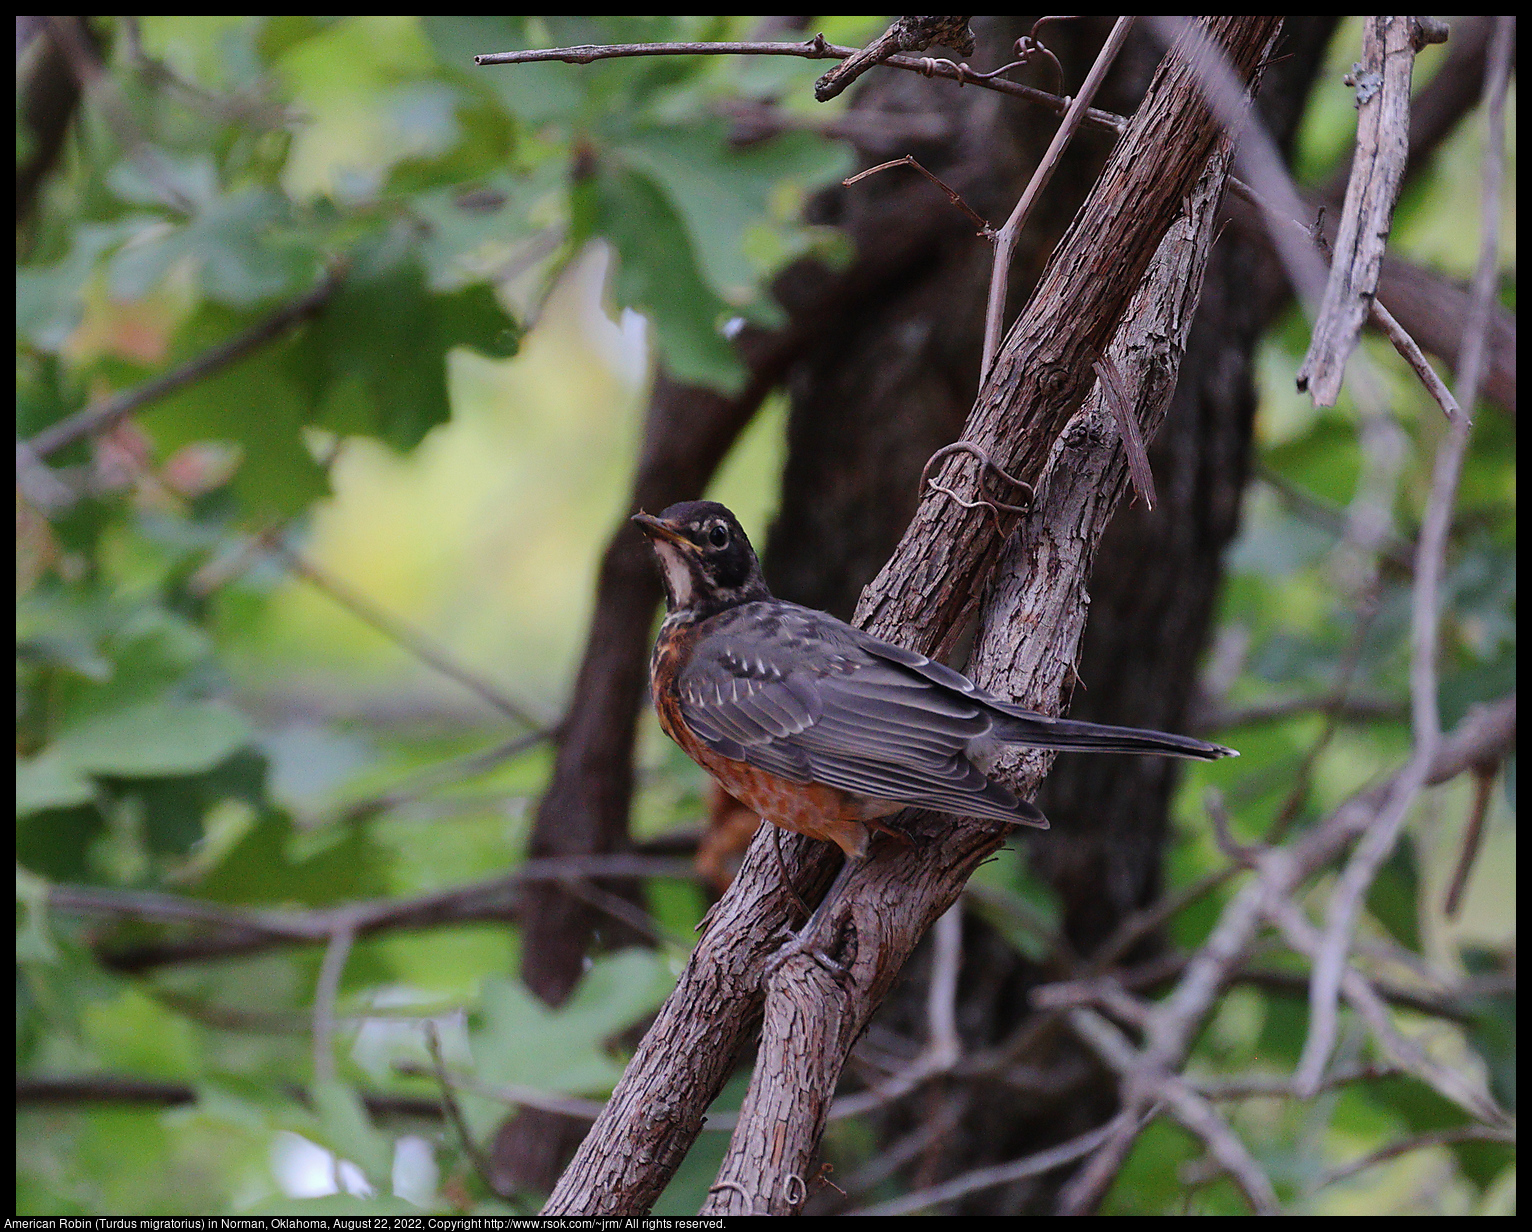 American Robin (Turdus migratorius) in Norman, Oklahoma, August 22, 2022